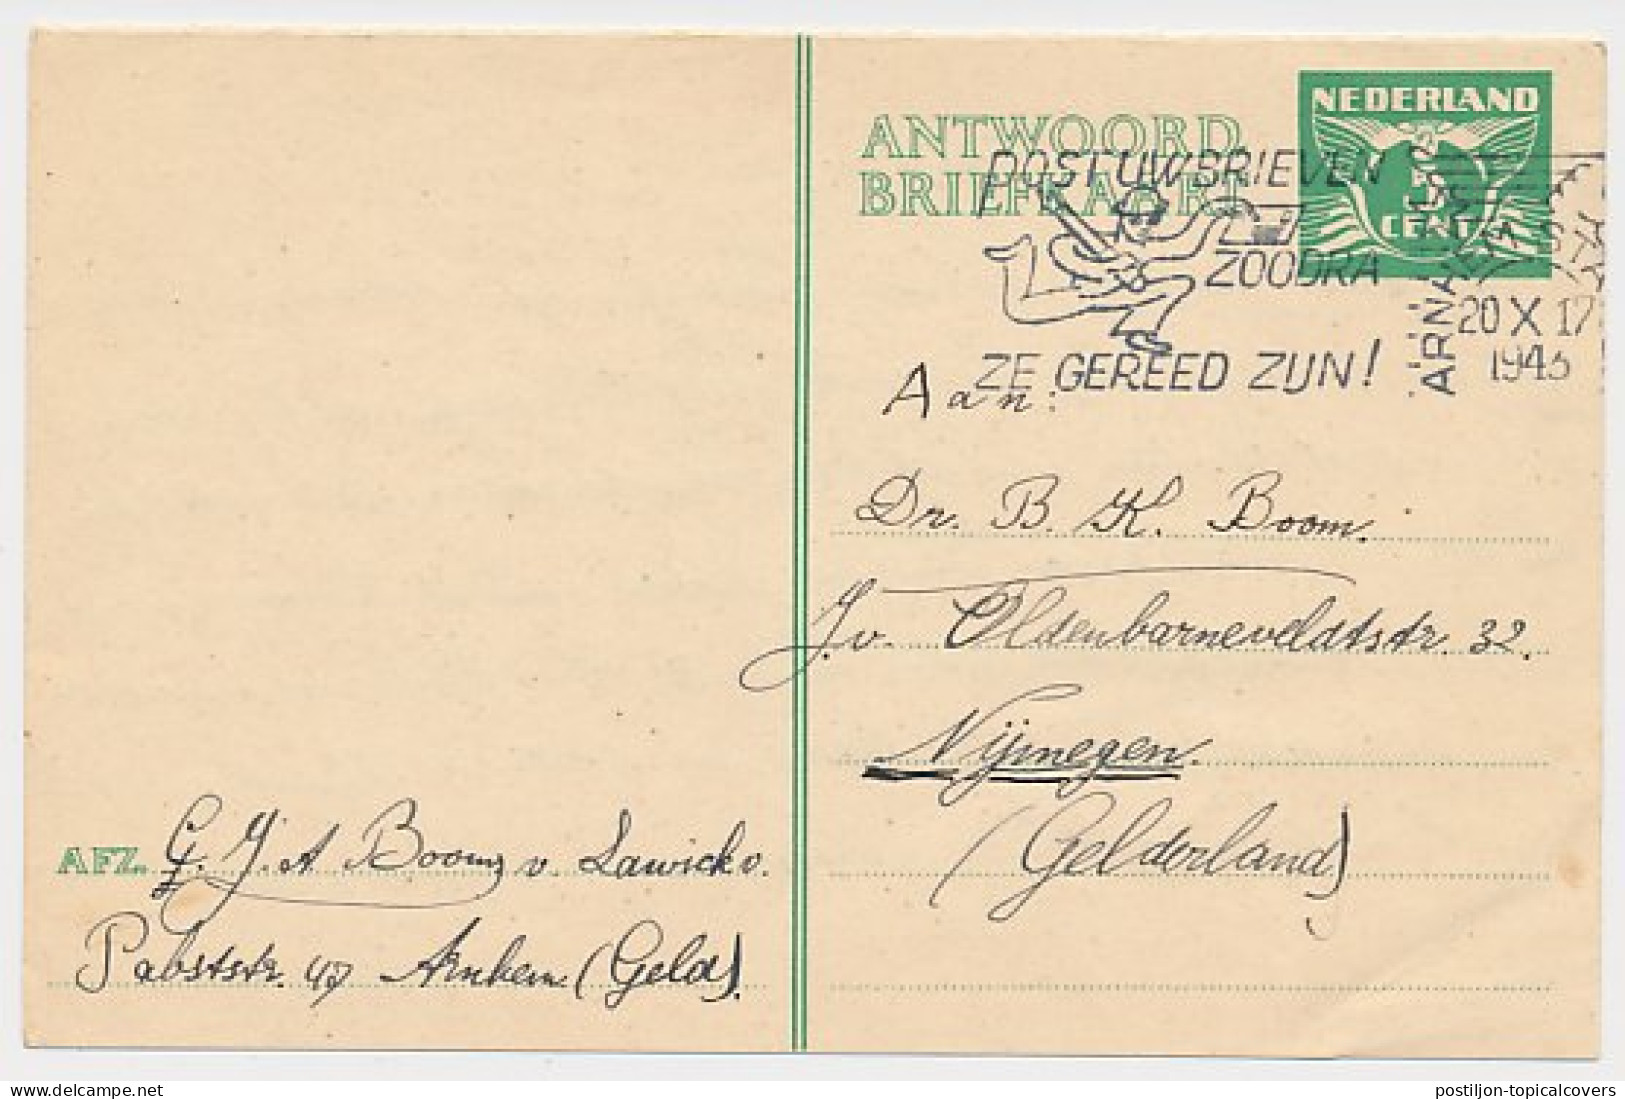 Briefkaart G. 272 A-krt. Arnhem - Nijmegen 1943 - Postal Stationery